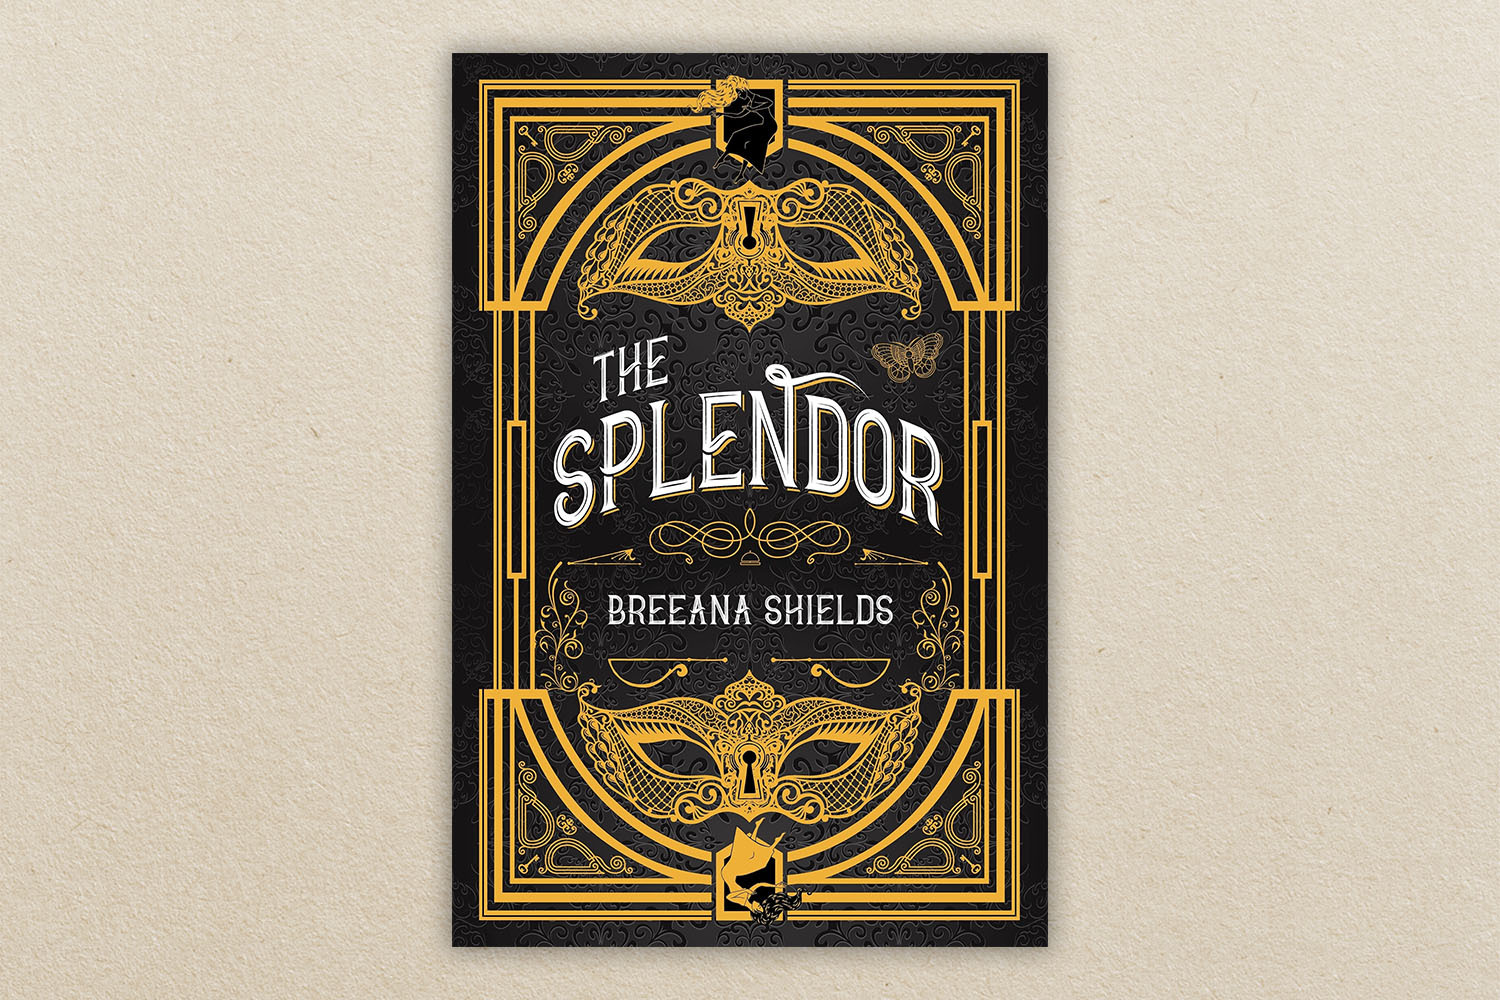 The Splendor book on beige background